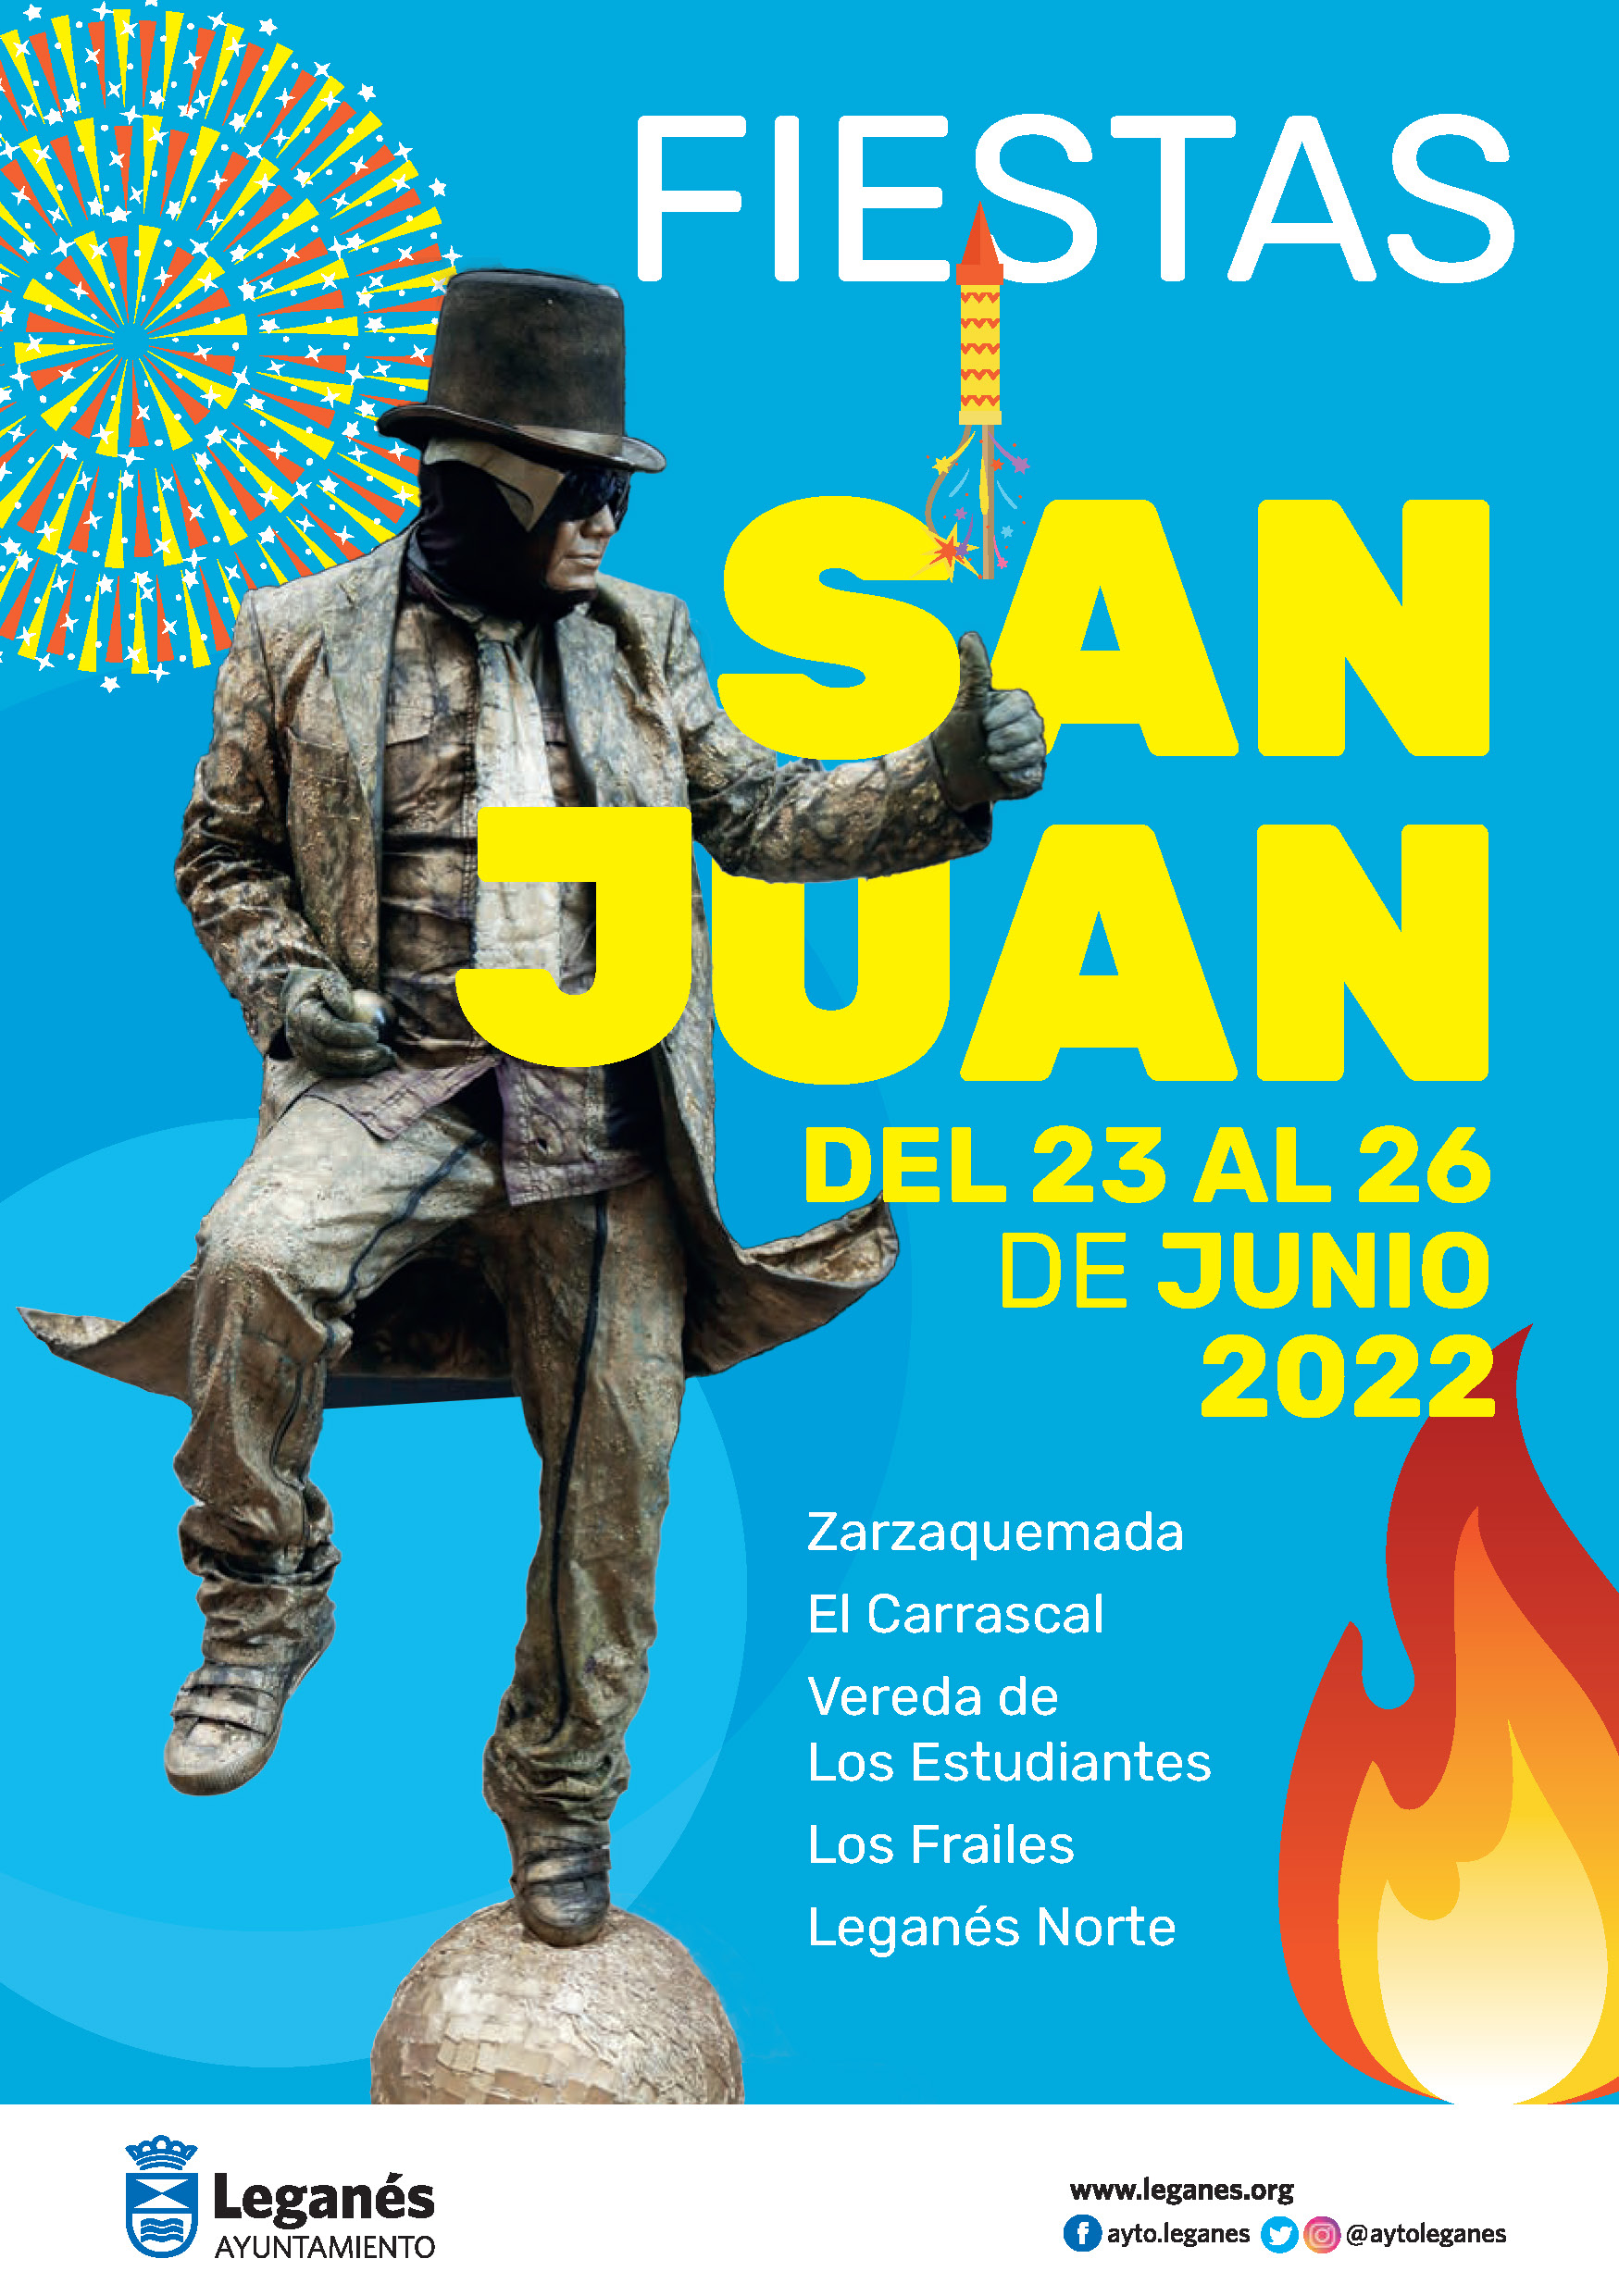 Programa FIESTAS DE SAN JUAN 2022 en Leganés OCIO EN LEGANÉS